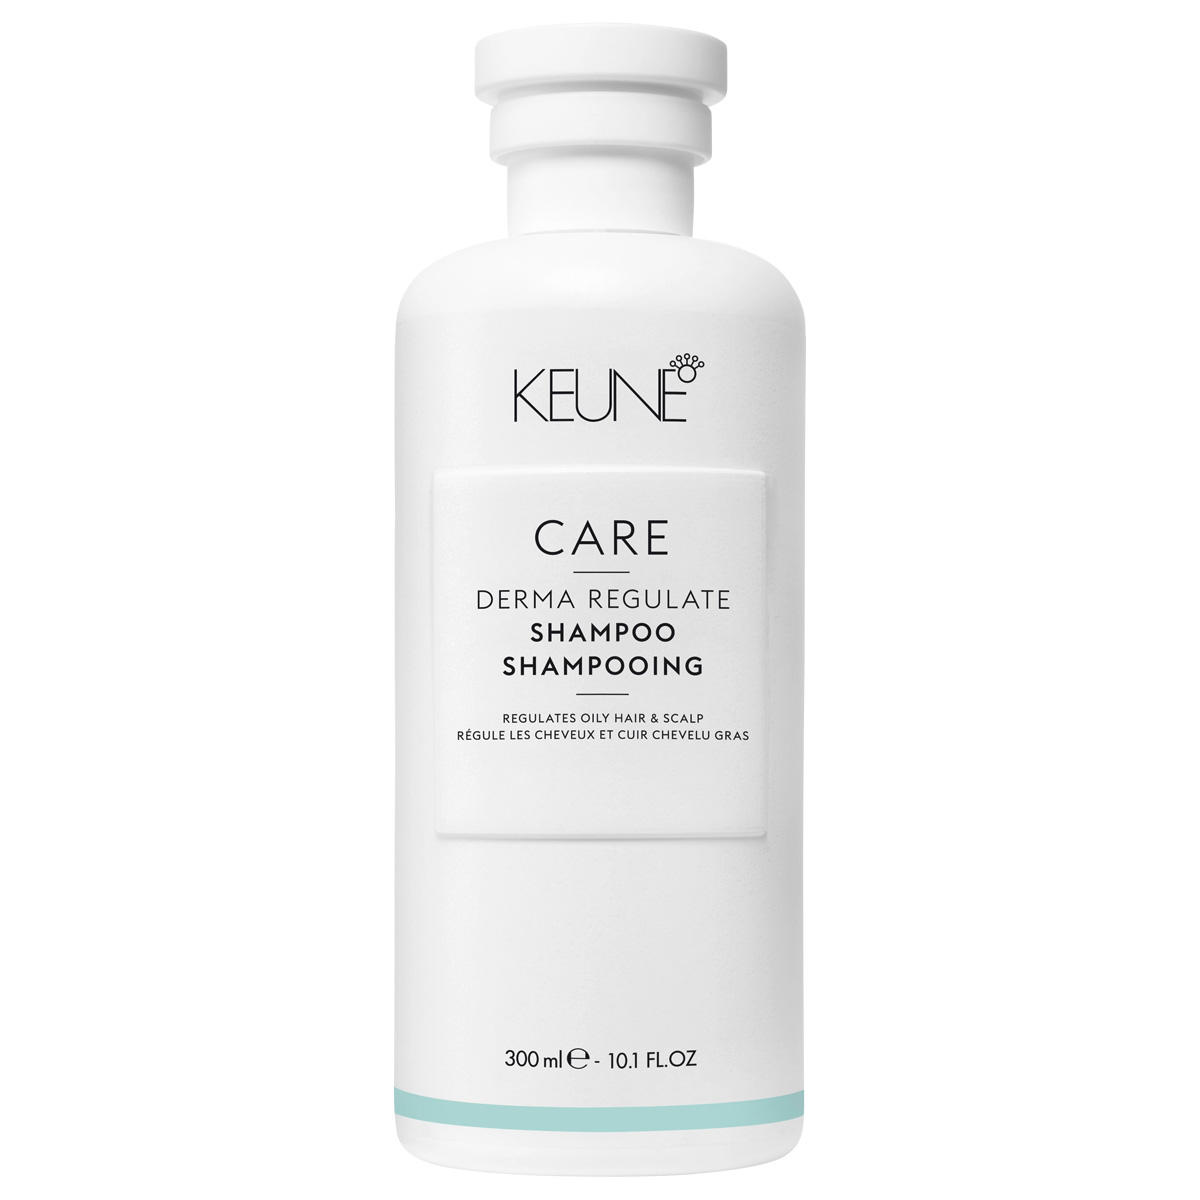 KEUNE CARE Derma Regulate Shampoo 300 ml - 1